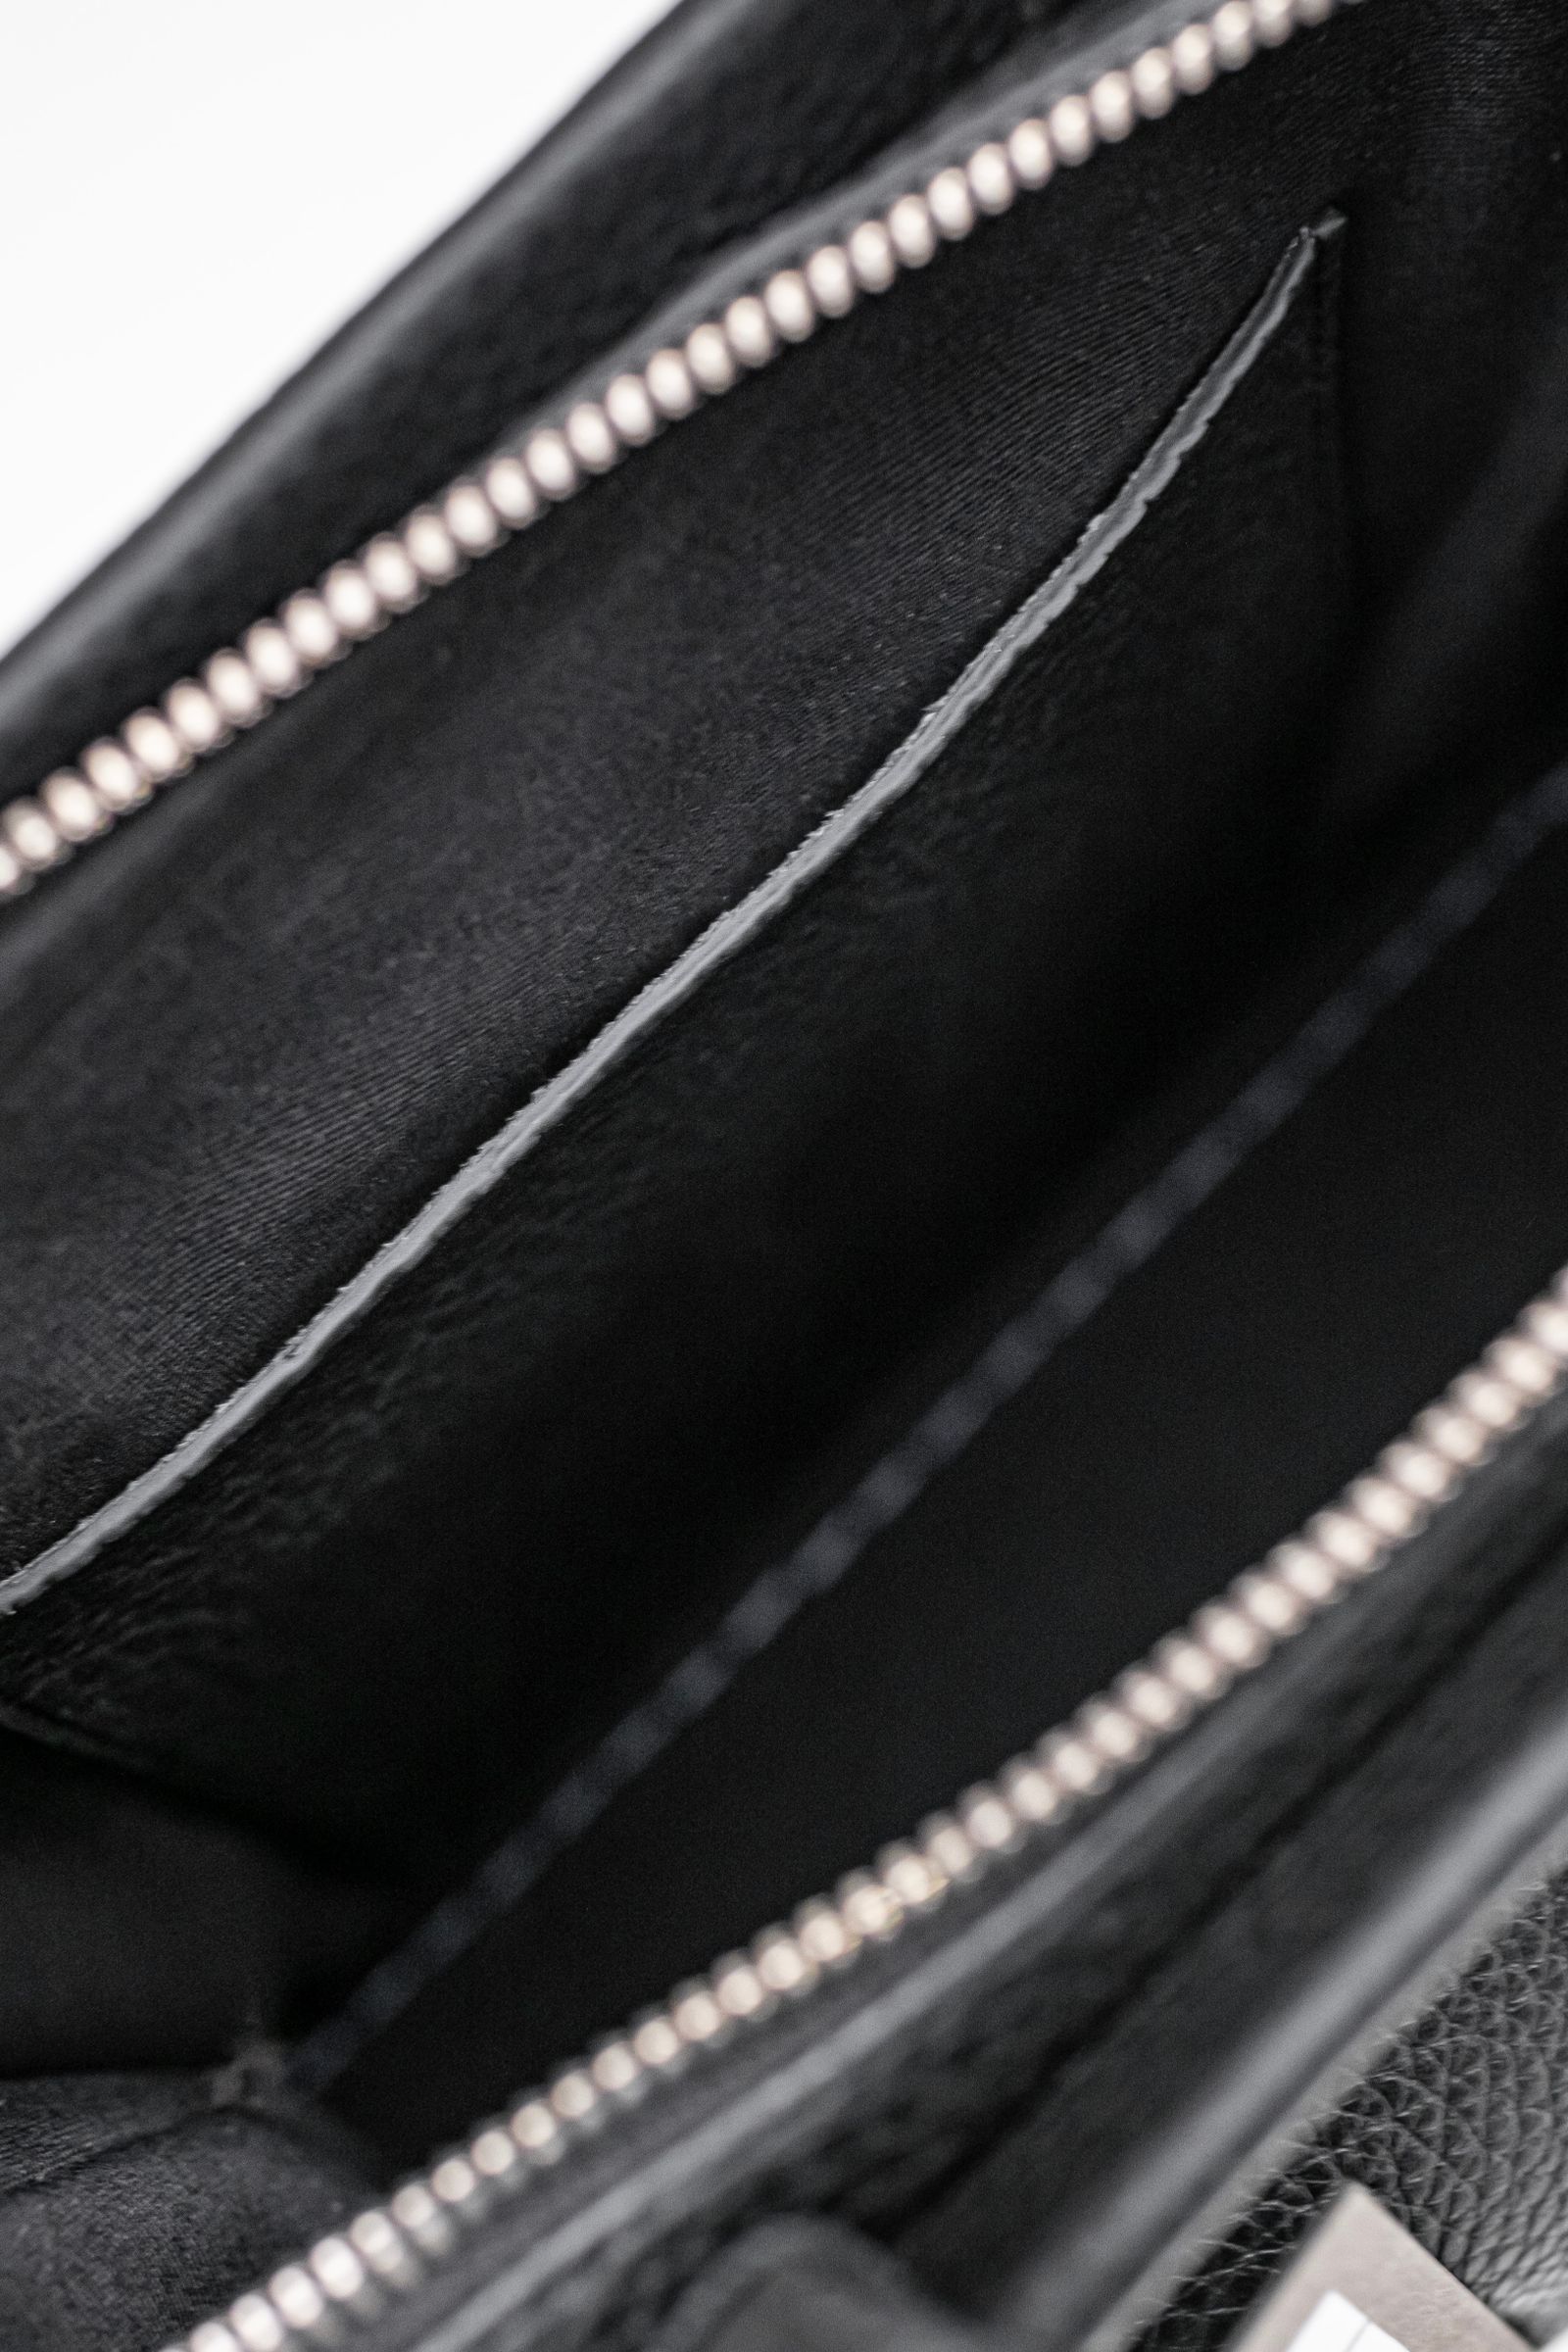 EARLE - Shoe Sole Square Mini Bag / Black | Retikle Online Store